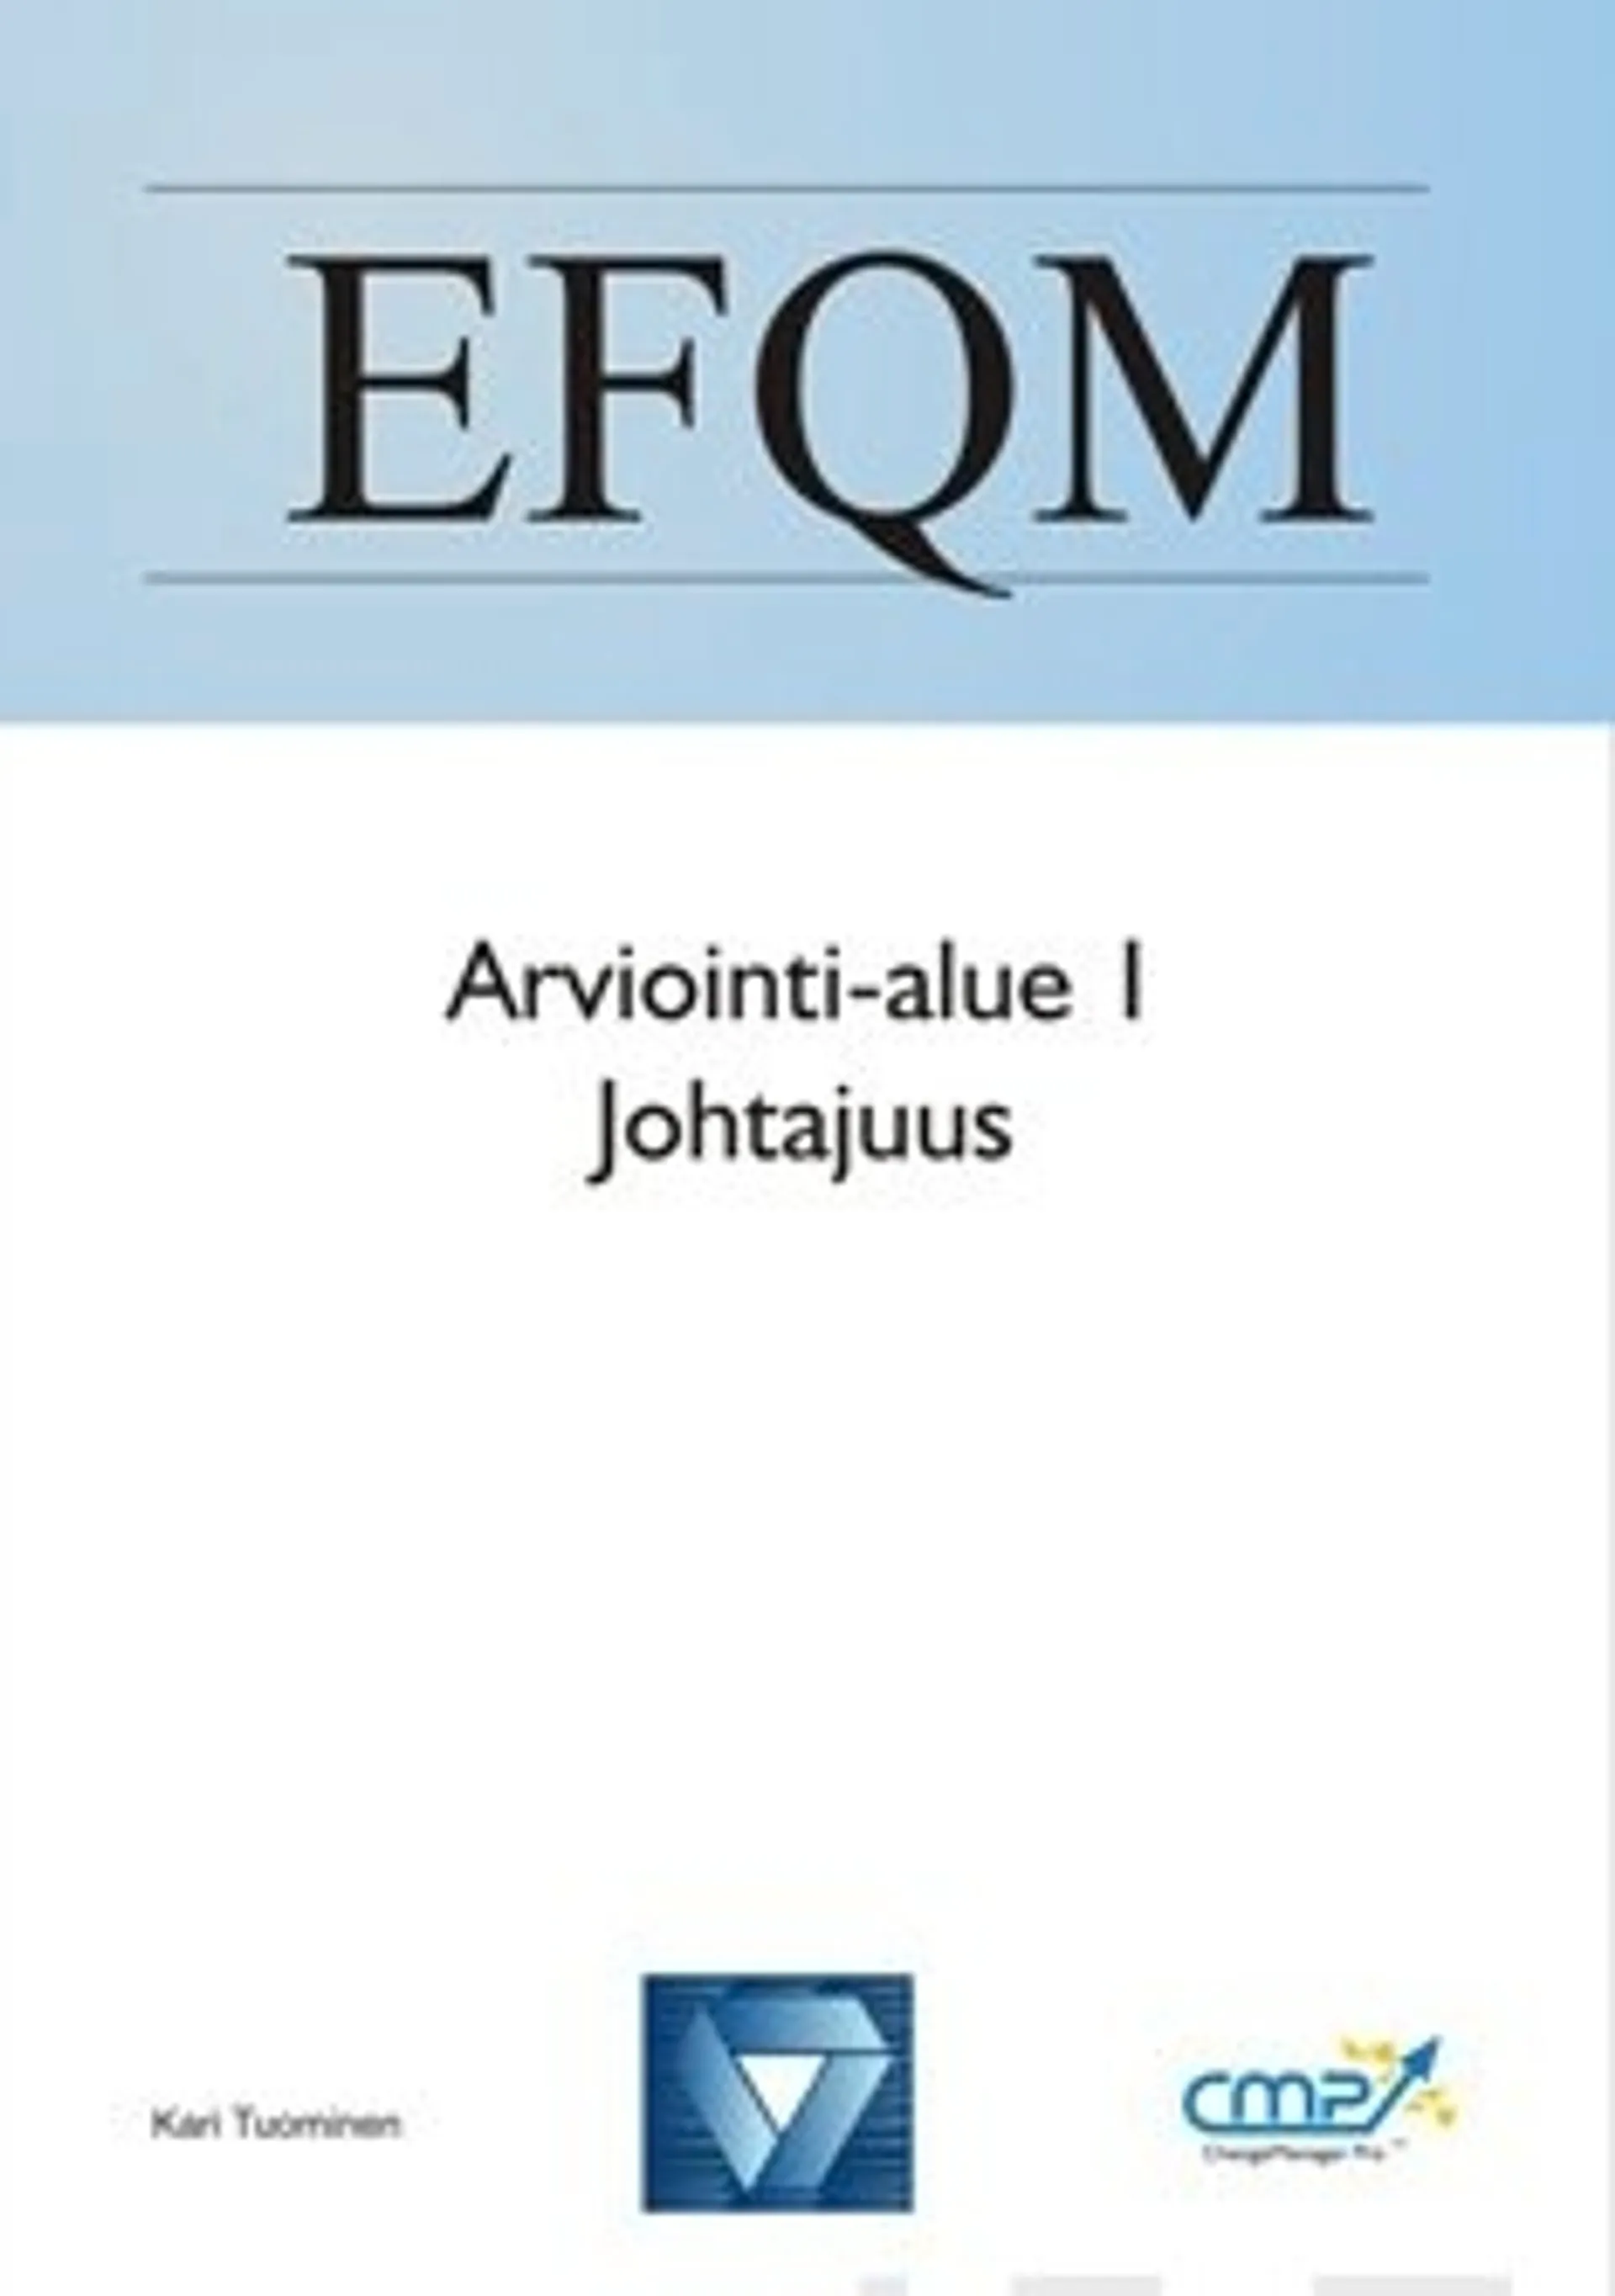 EFQM - arviointialue 1